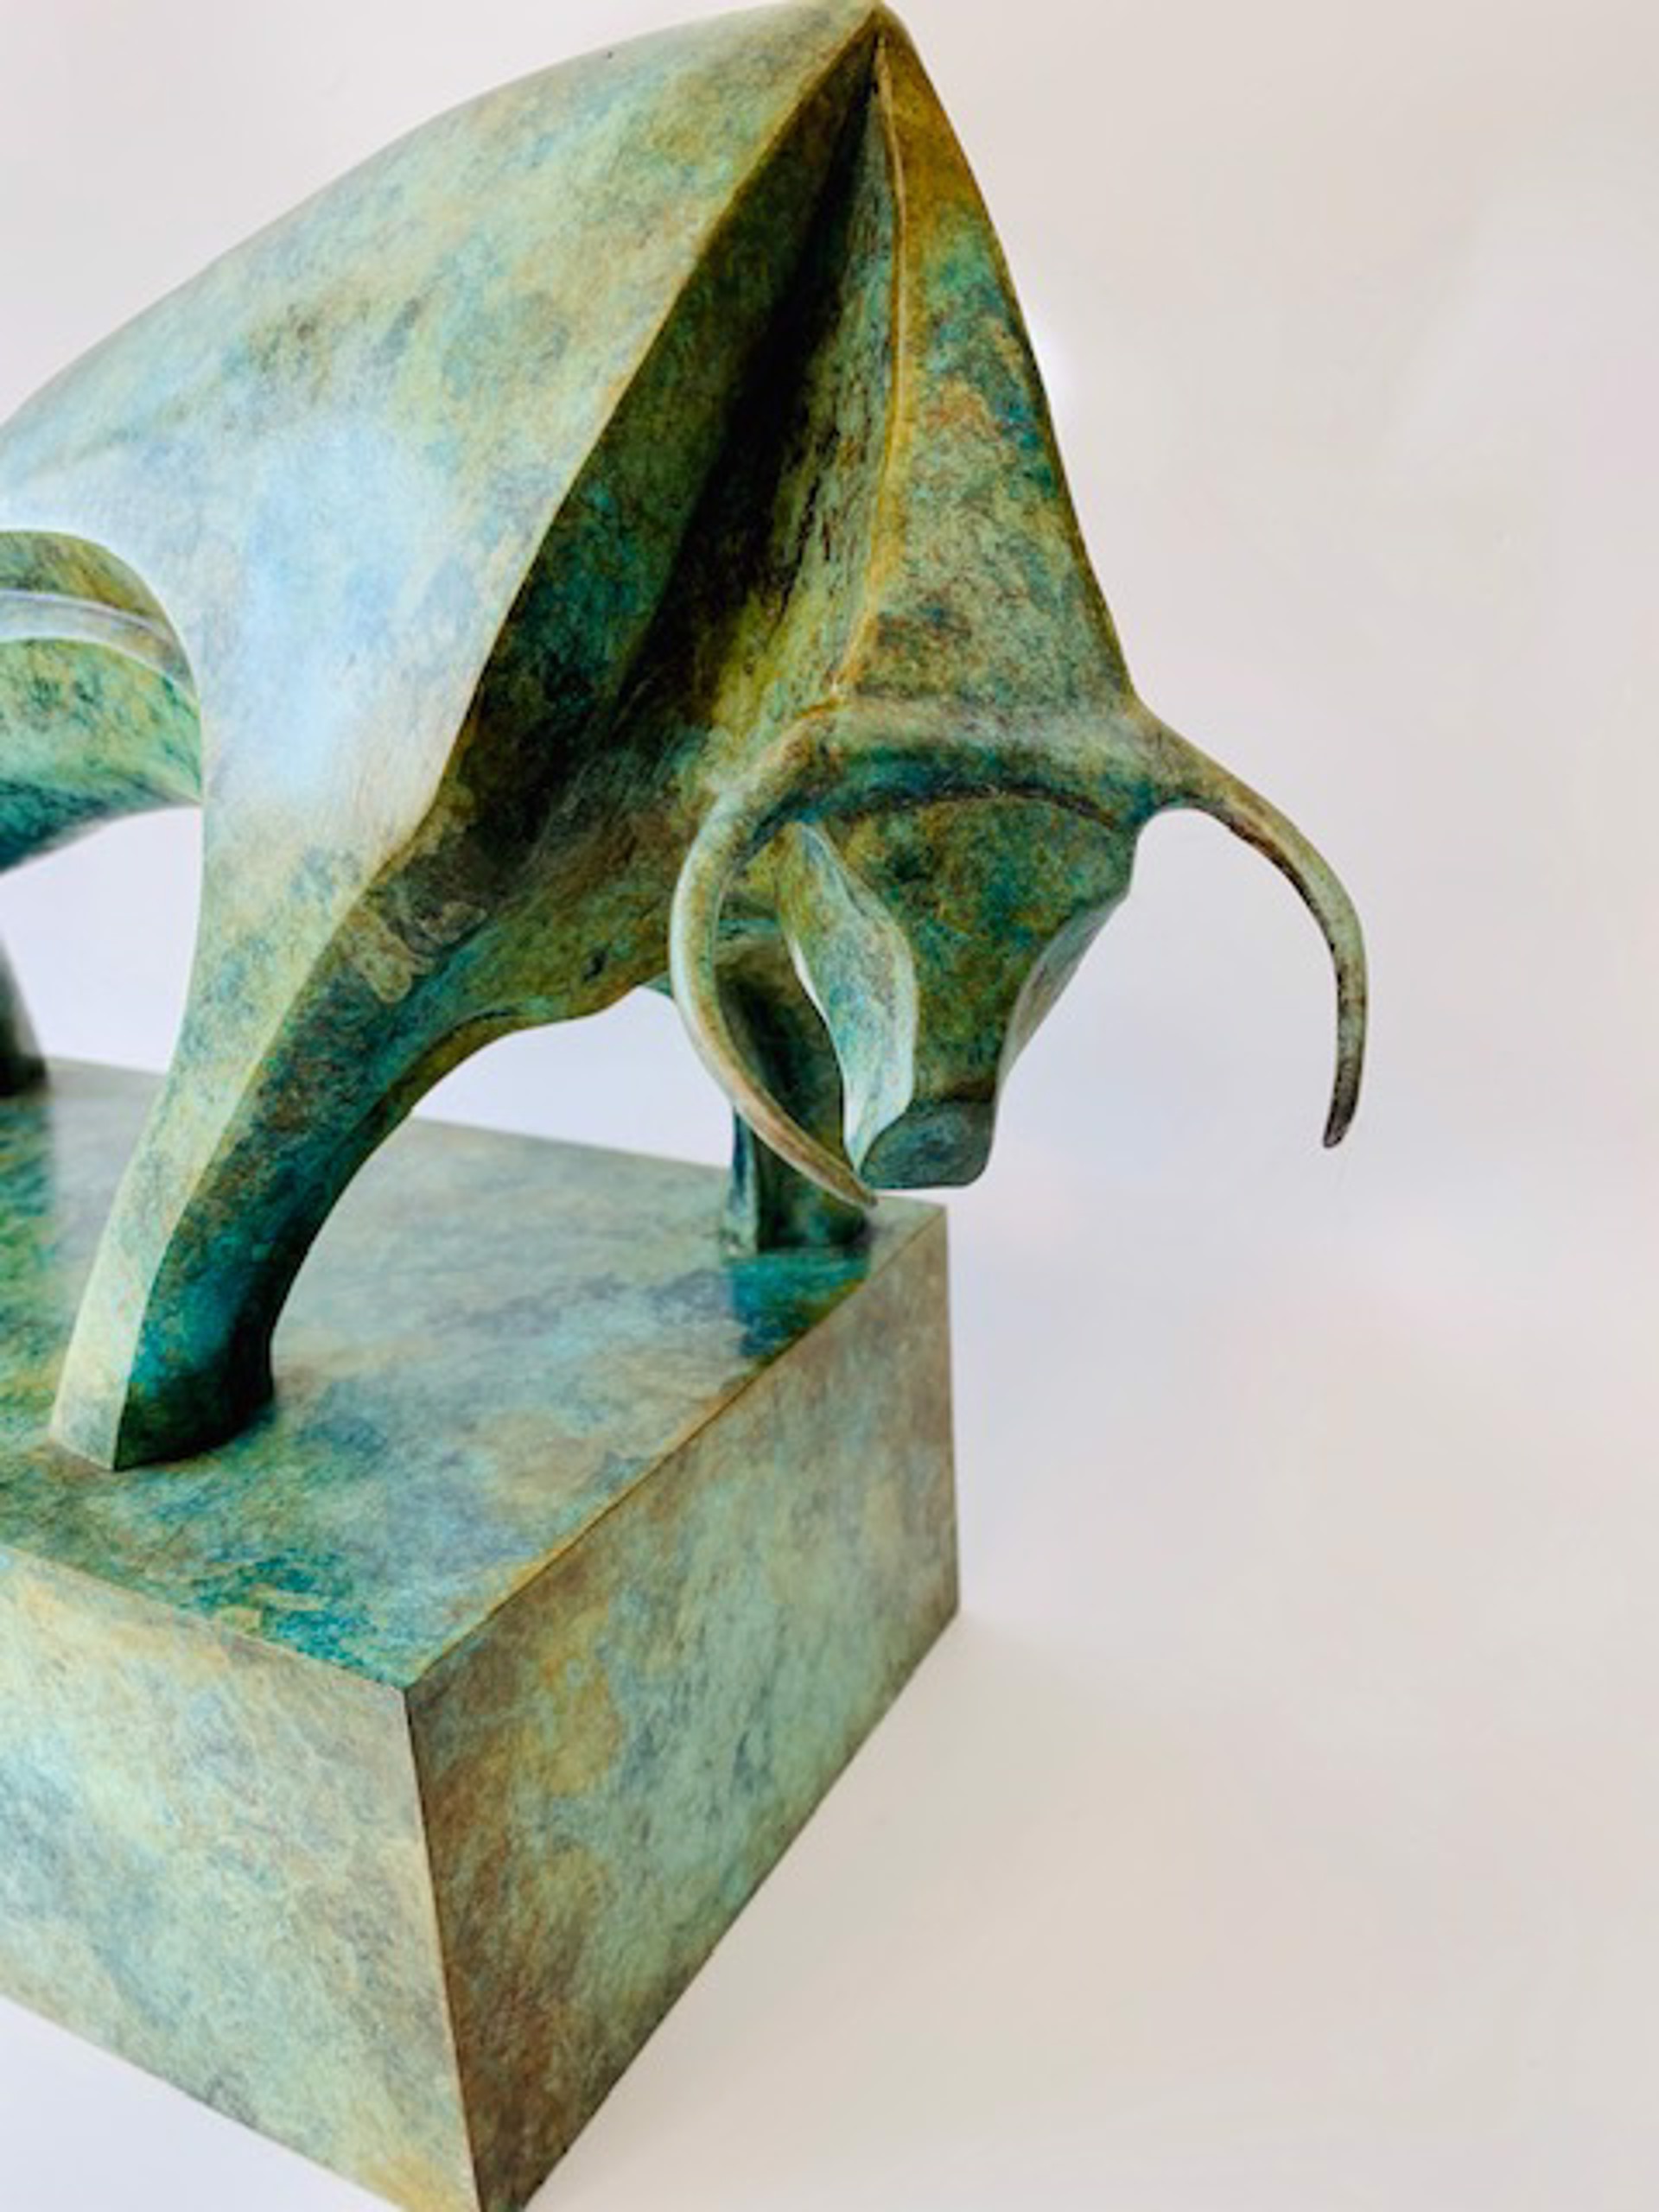 Le Taureau - bronze bull sculpture